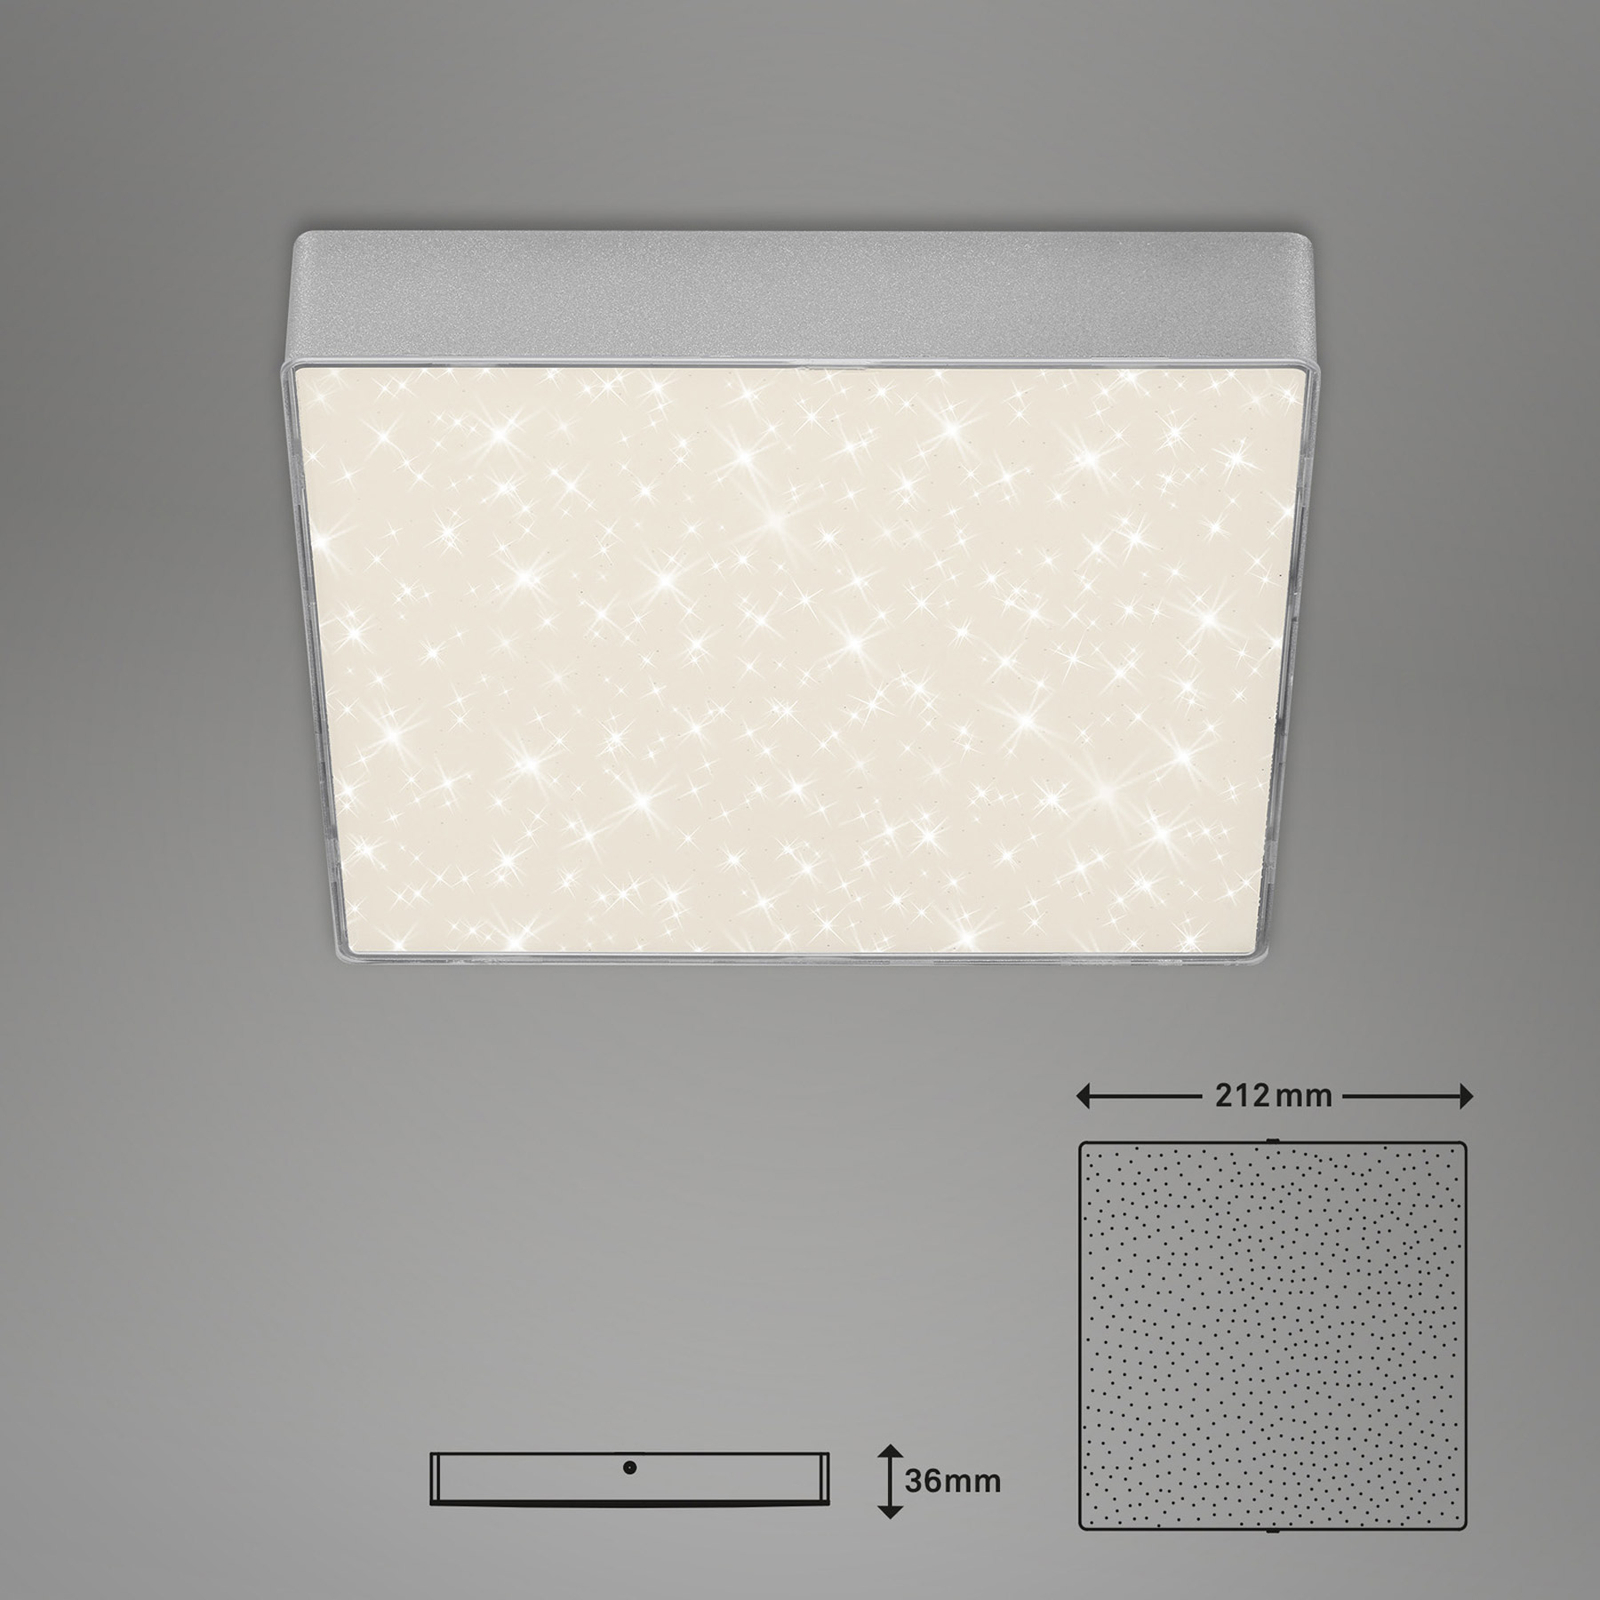 LED plafondlamp Flame Star, 21,2 x 21,2 cm zilver